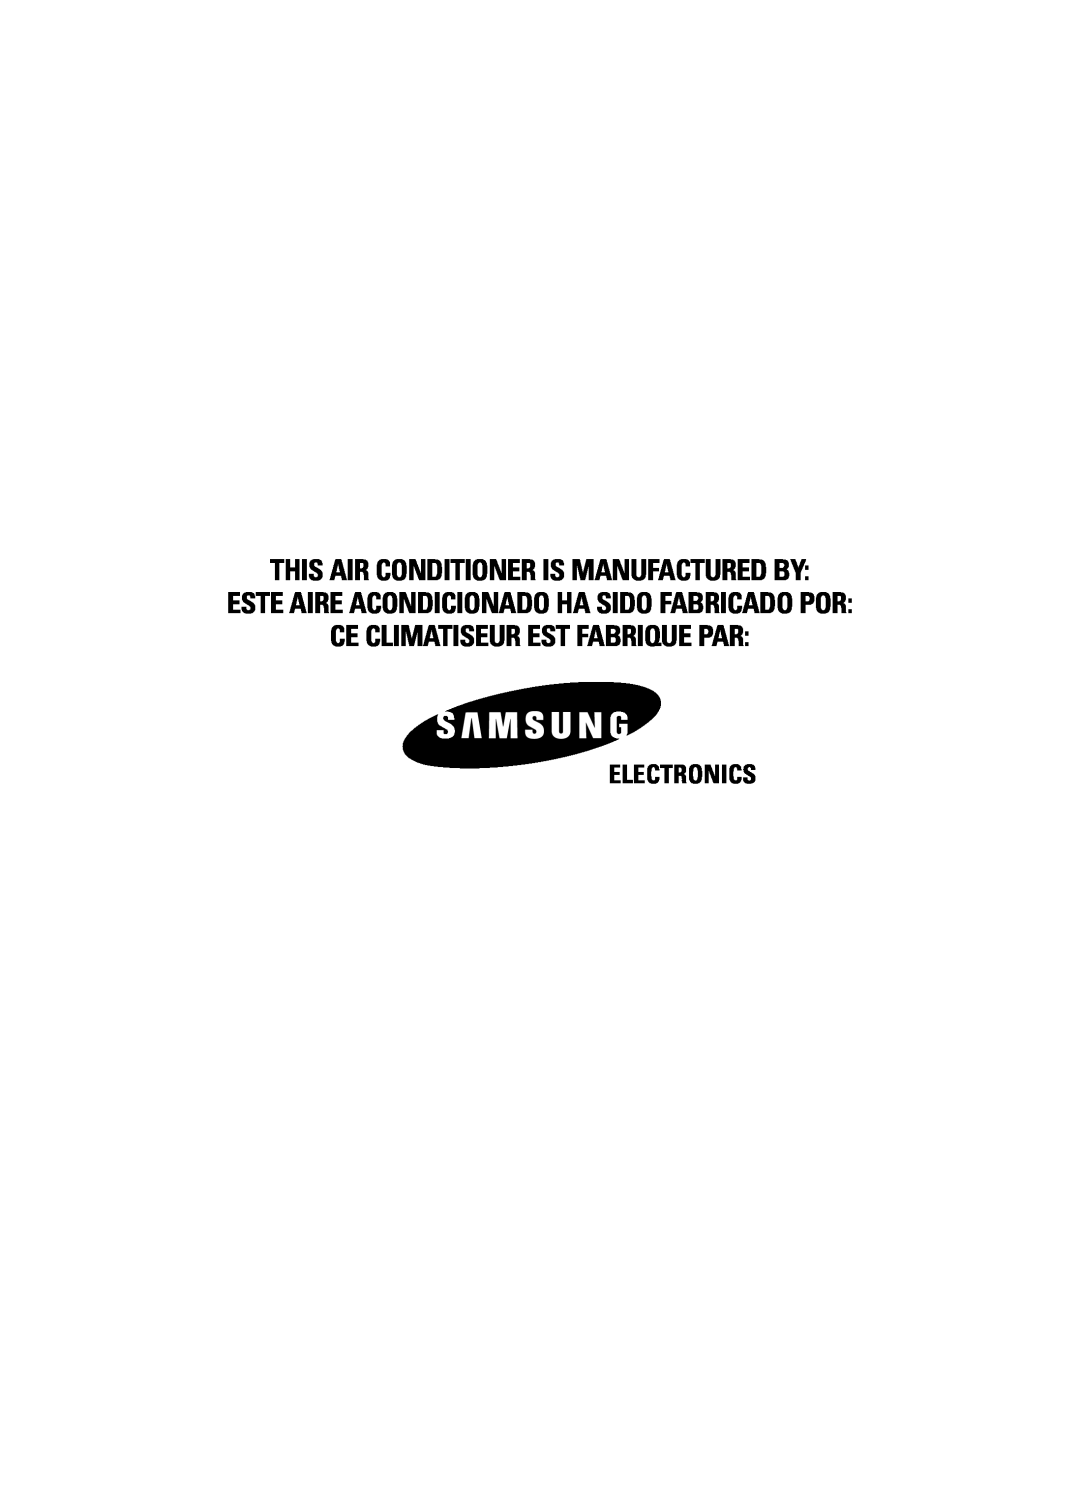 Samsung US07A5(6)MA This Air Conditioner Is Manufactured By, Este Aire Acondicionado Ha Sido Fabricado Por, Electronics 